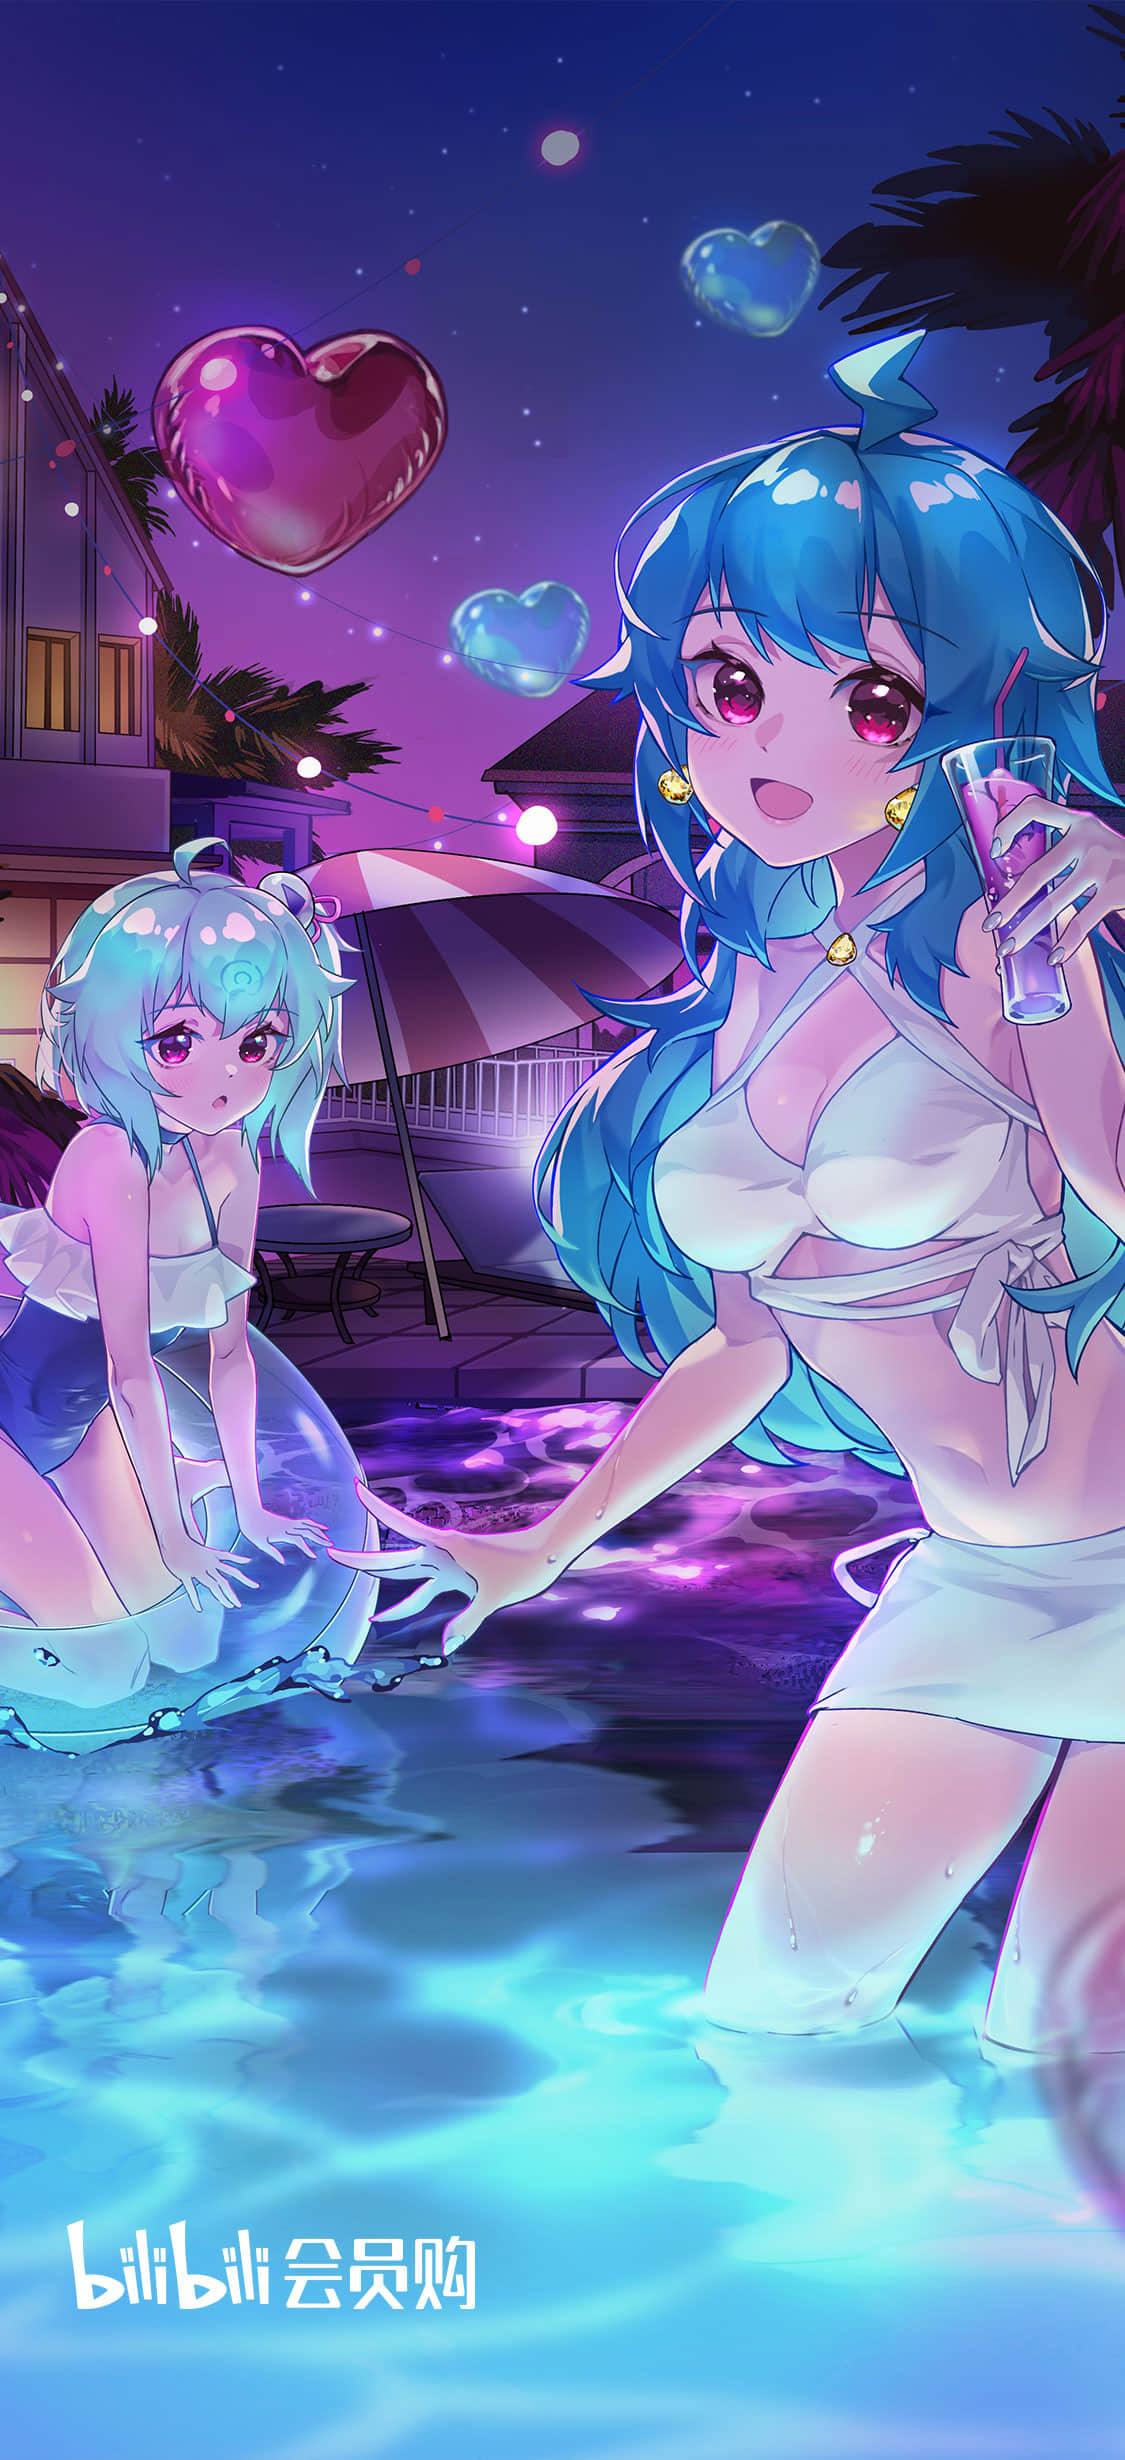 22 Bilibili 33 Bilibili Bili Girl 33 Bilibili Anime Girls Blue Hair Floater Standing In Water Water  1125x2460